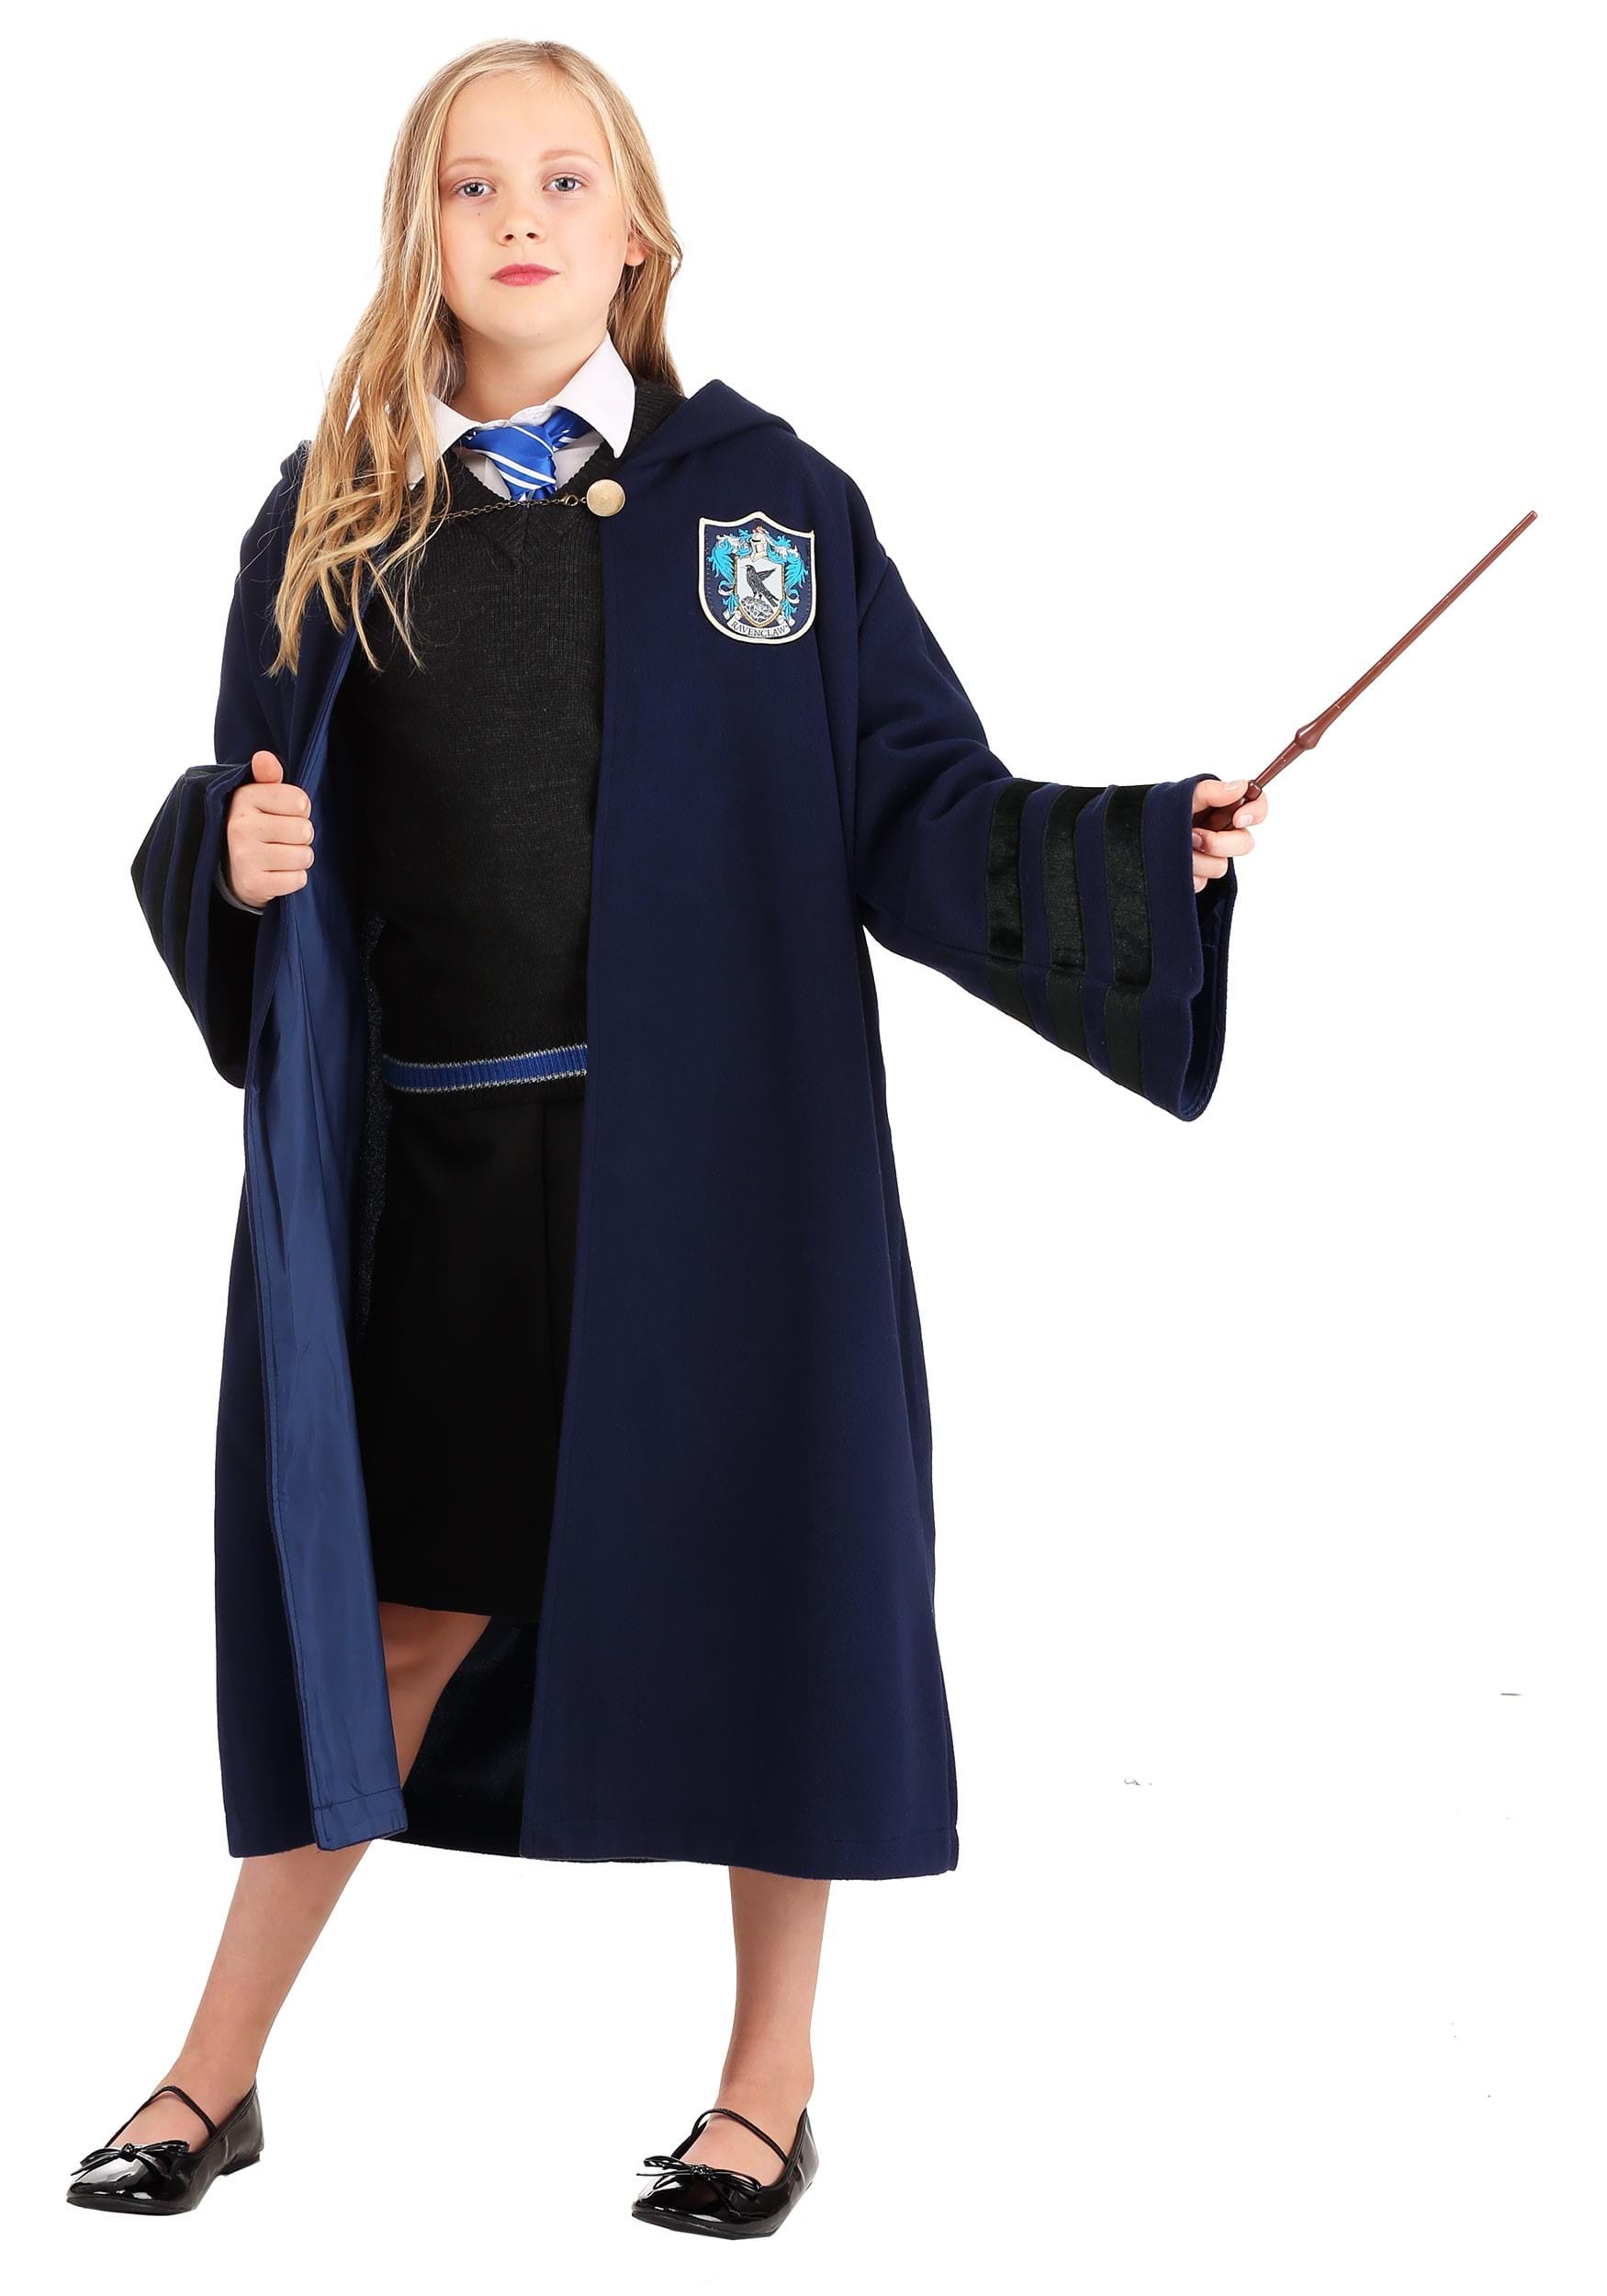 Catastrofe Democratie kassa Vintage Hogwarts Ravenclaw Costume Robe for Kids